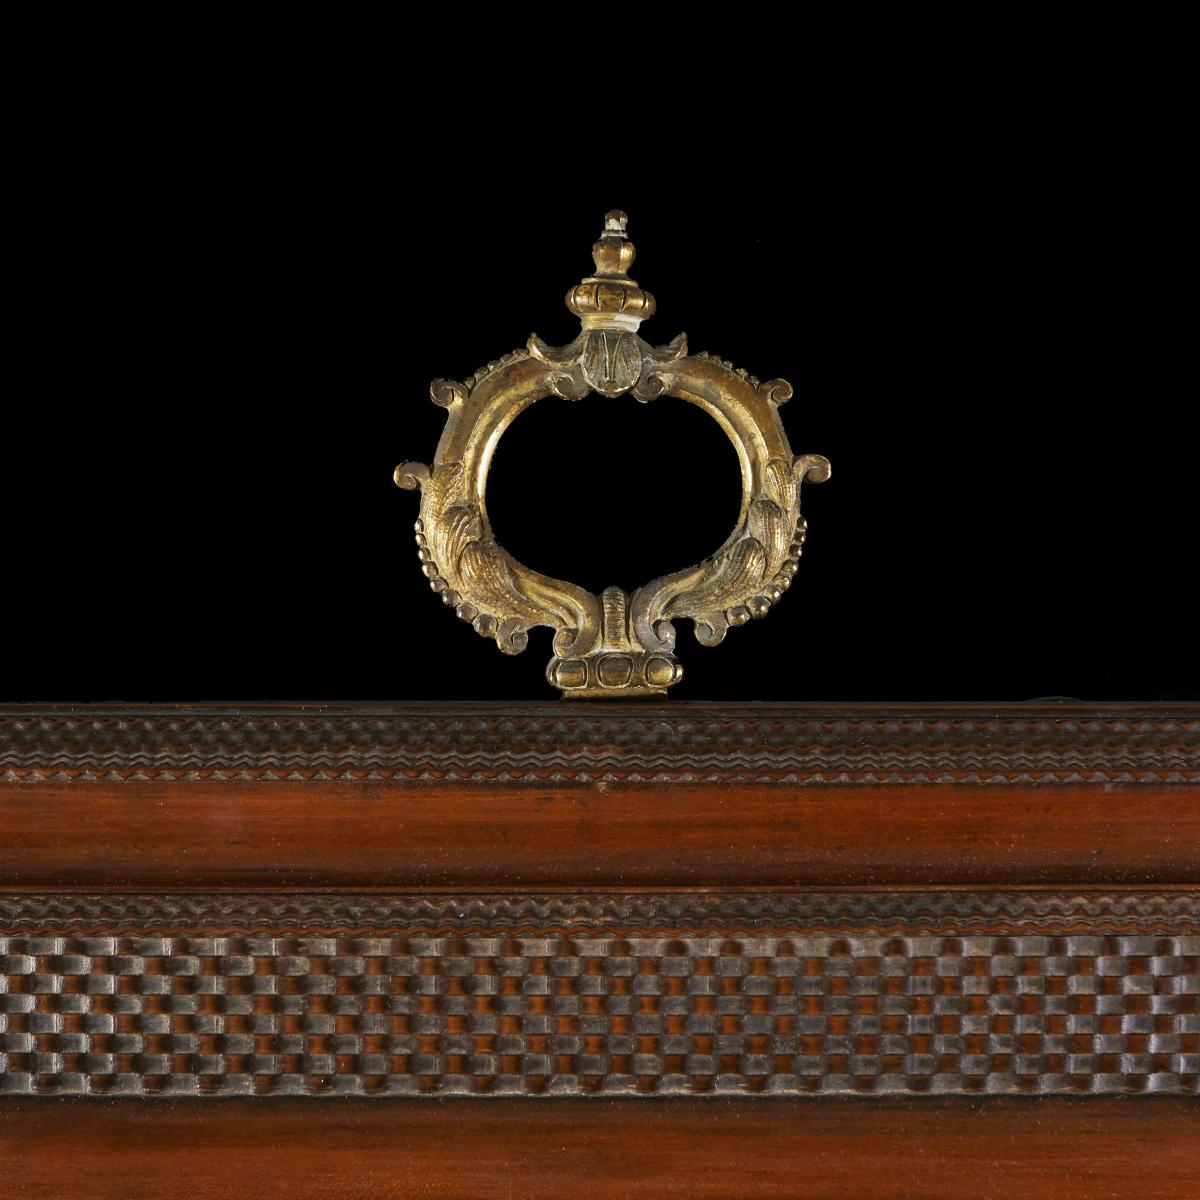 19th Century Walnut Flemish Ripple Mirror